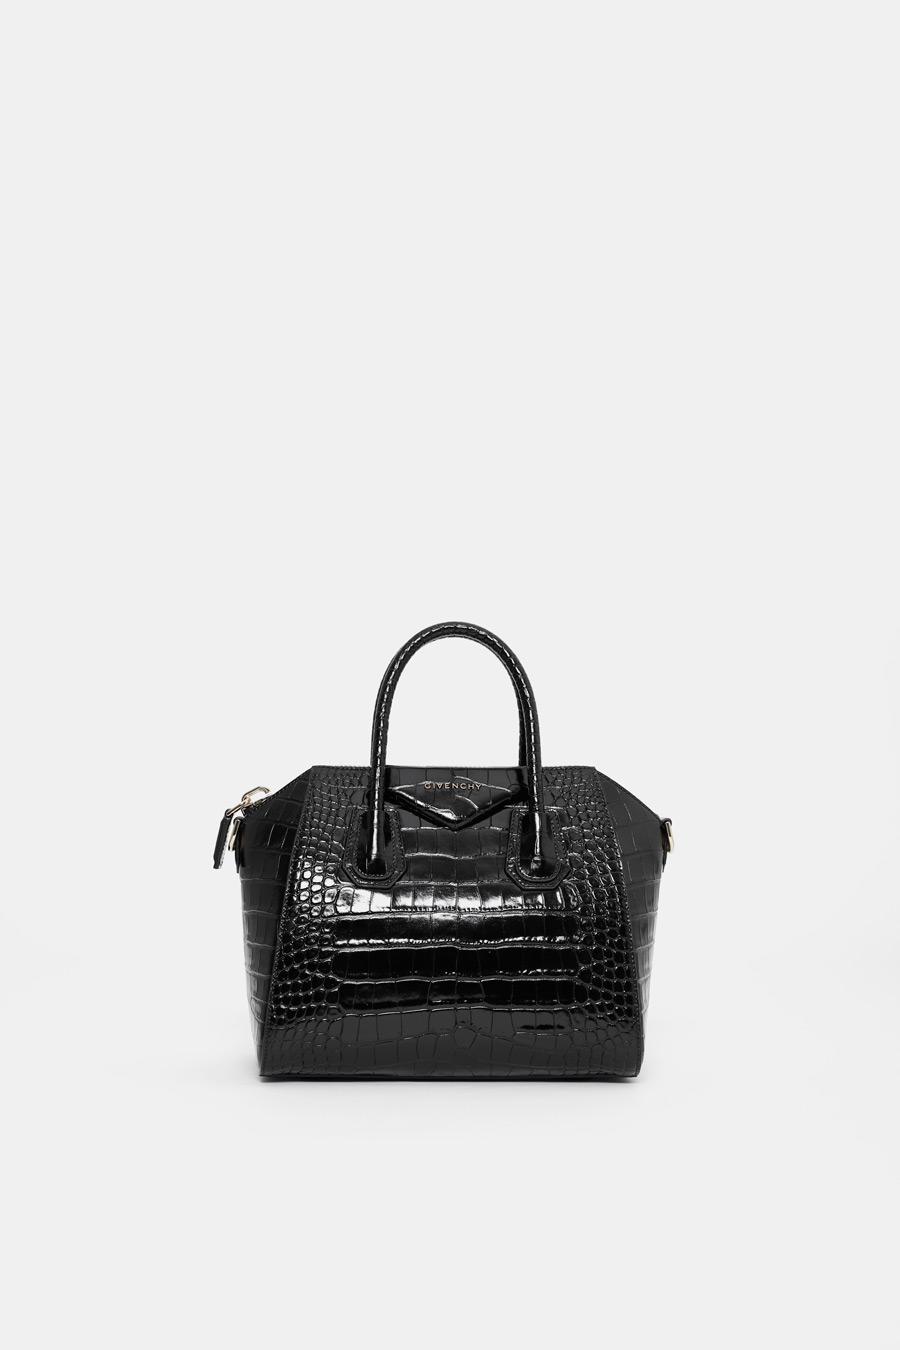 Givenchy Leather Small Antigona Bag In Crocodile Effect in Black - Lyst